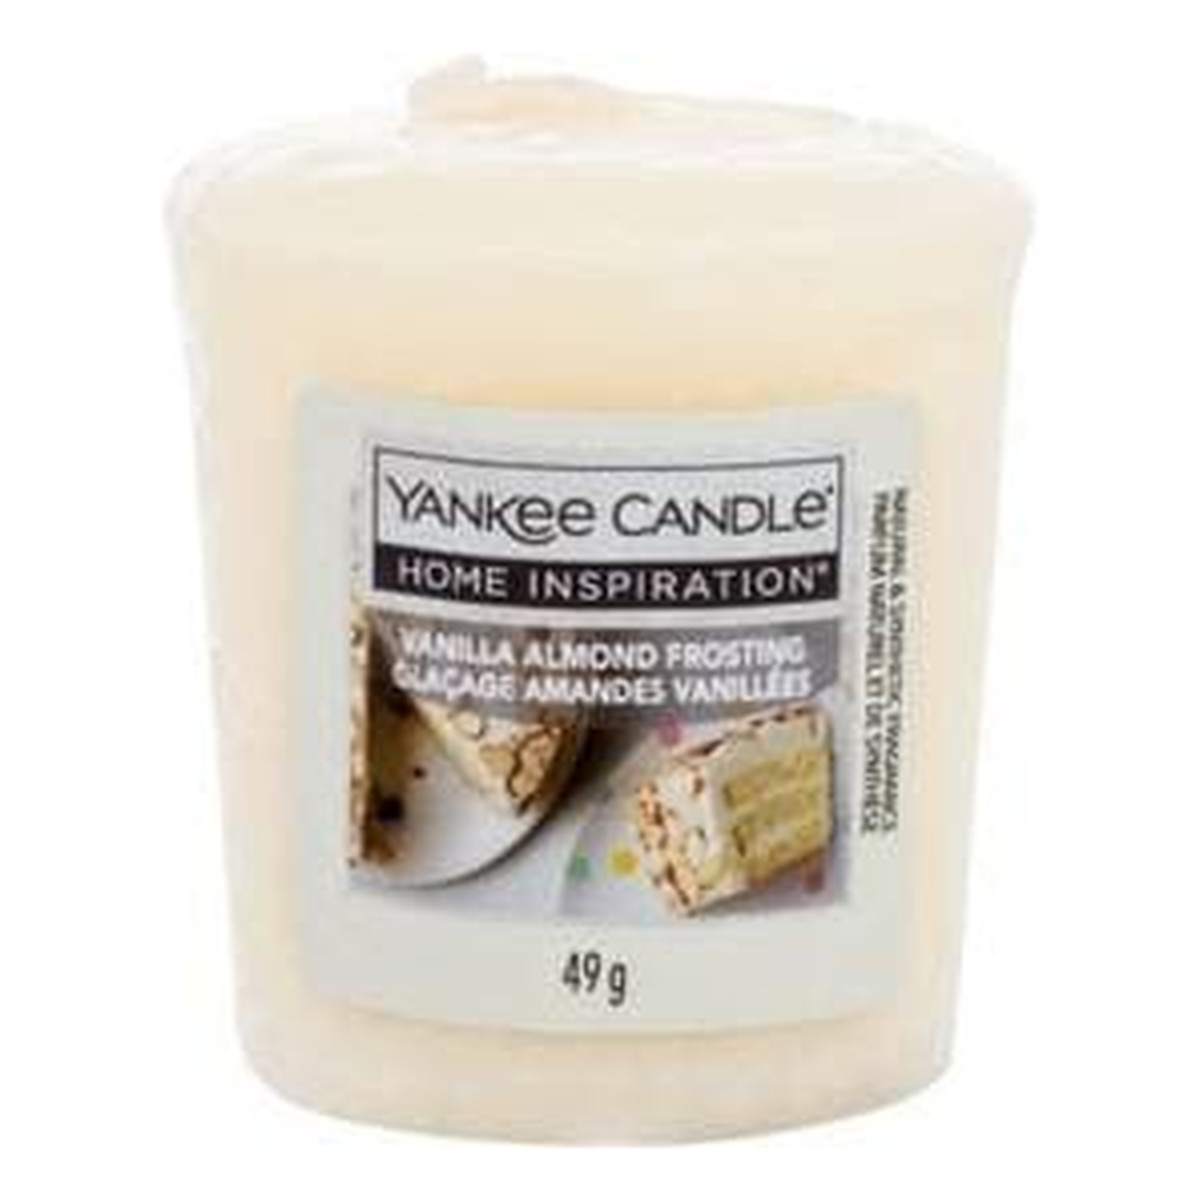 Yankee Candle Home Inspiration Świeca zapachowa Vanilla Almond Frosting 49g